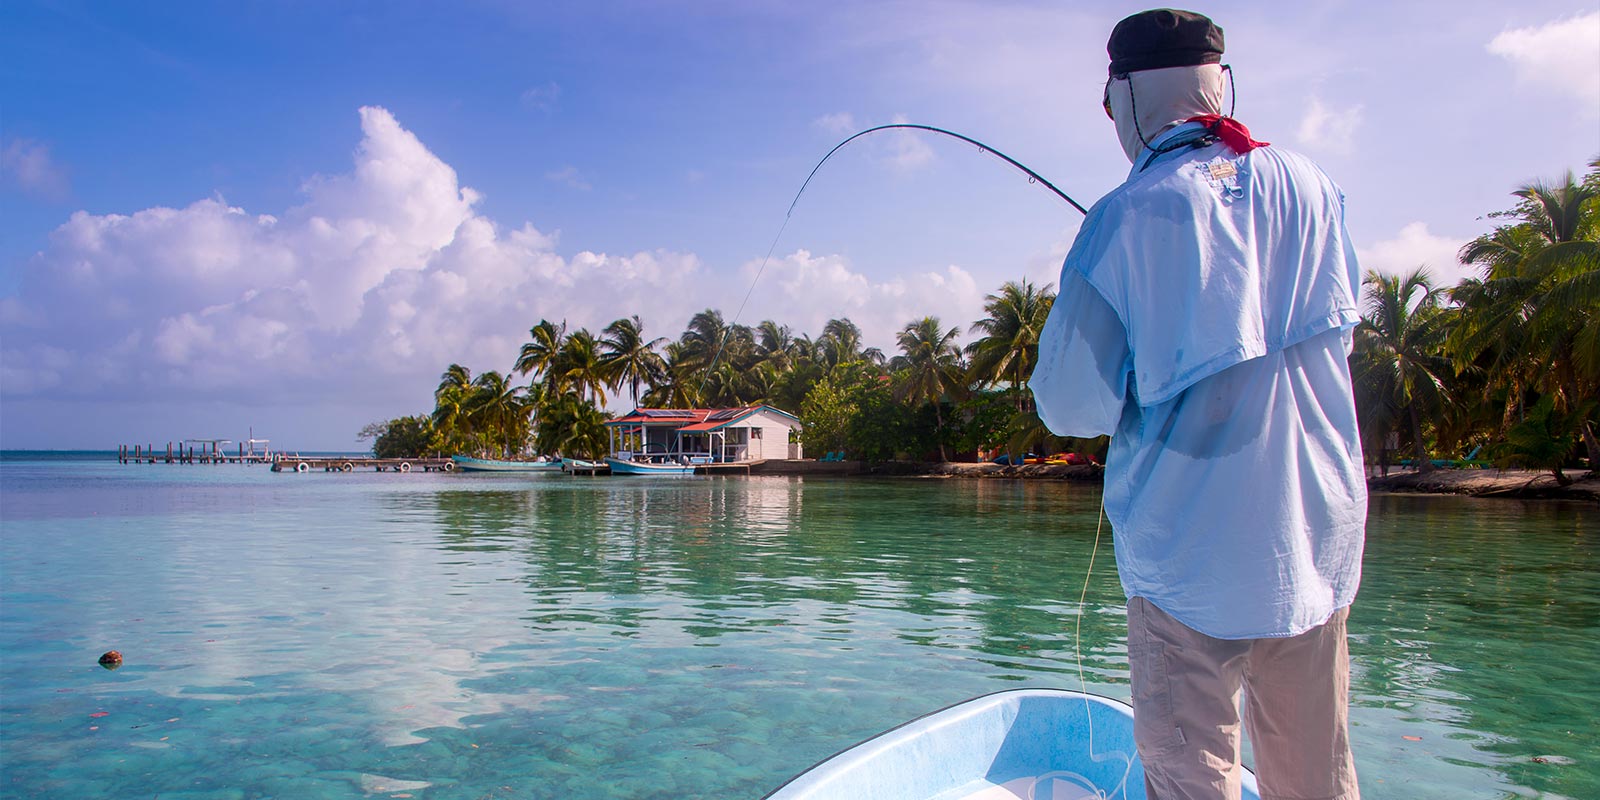 Belize Fishing Tours